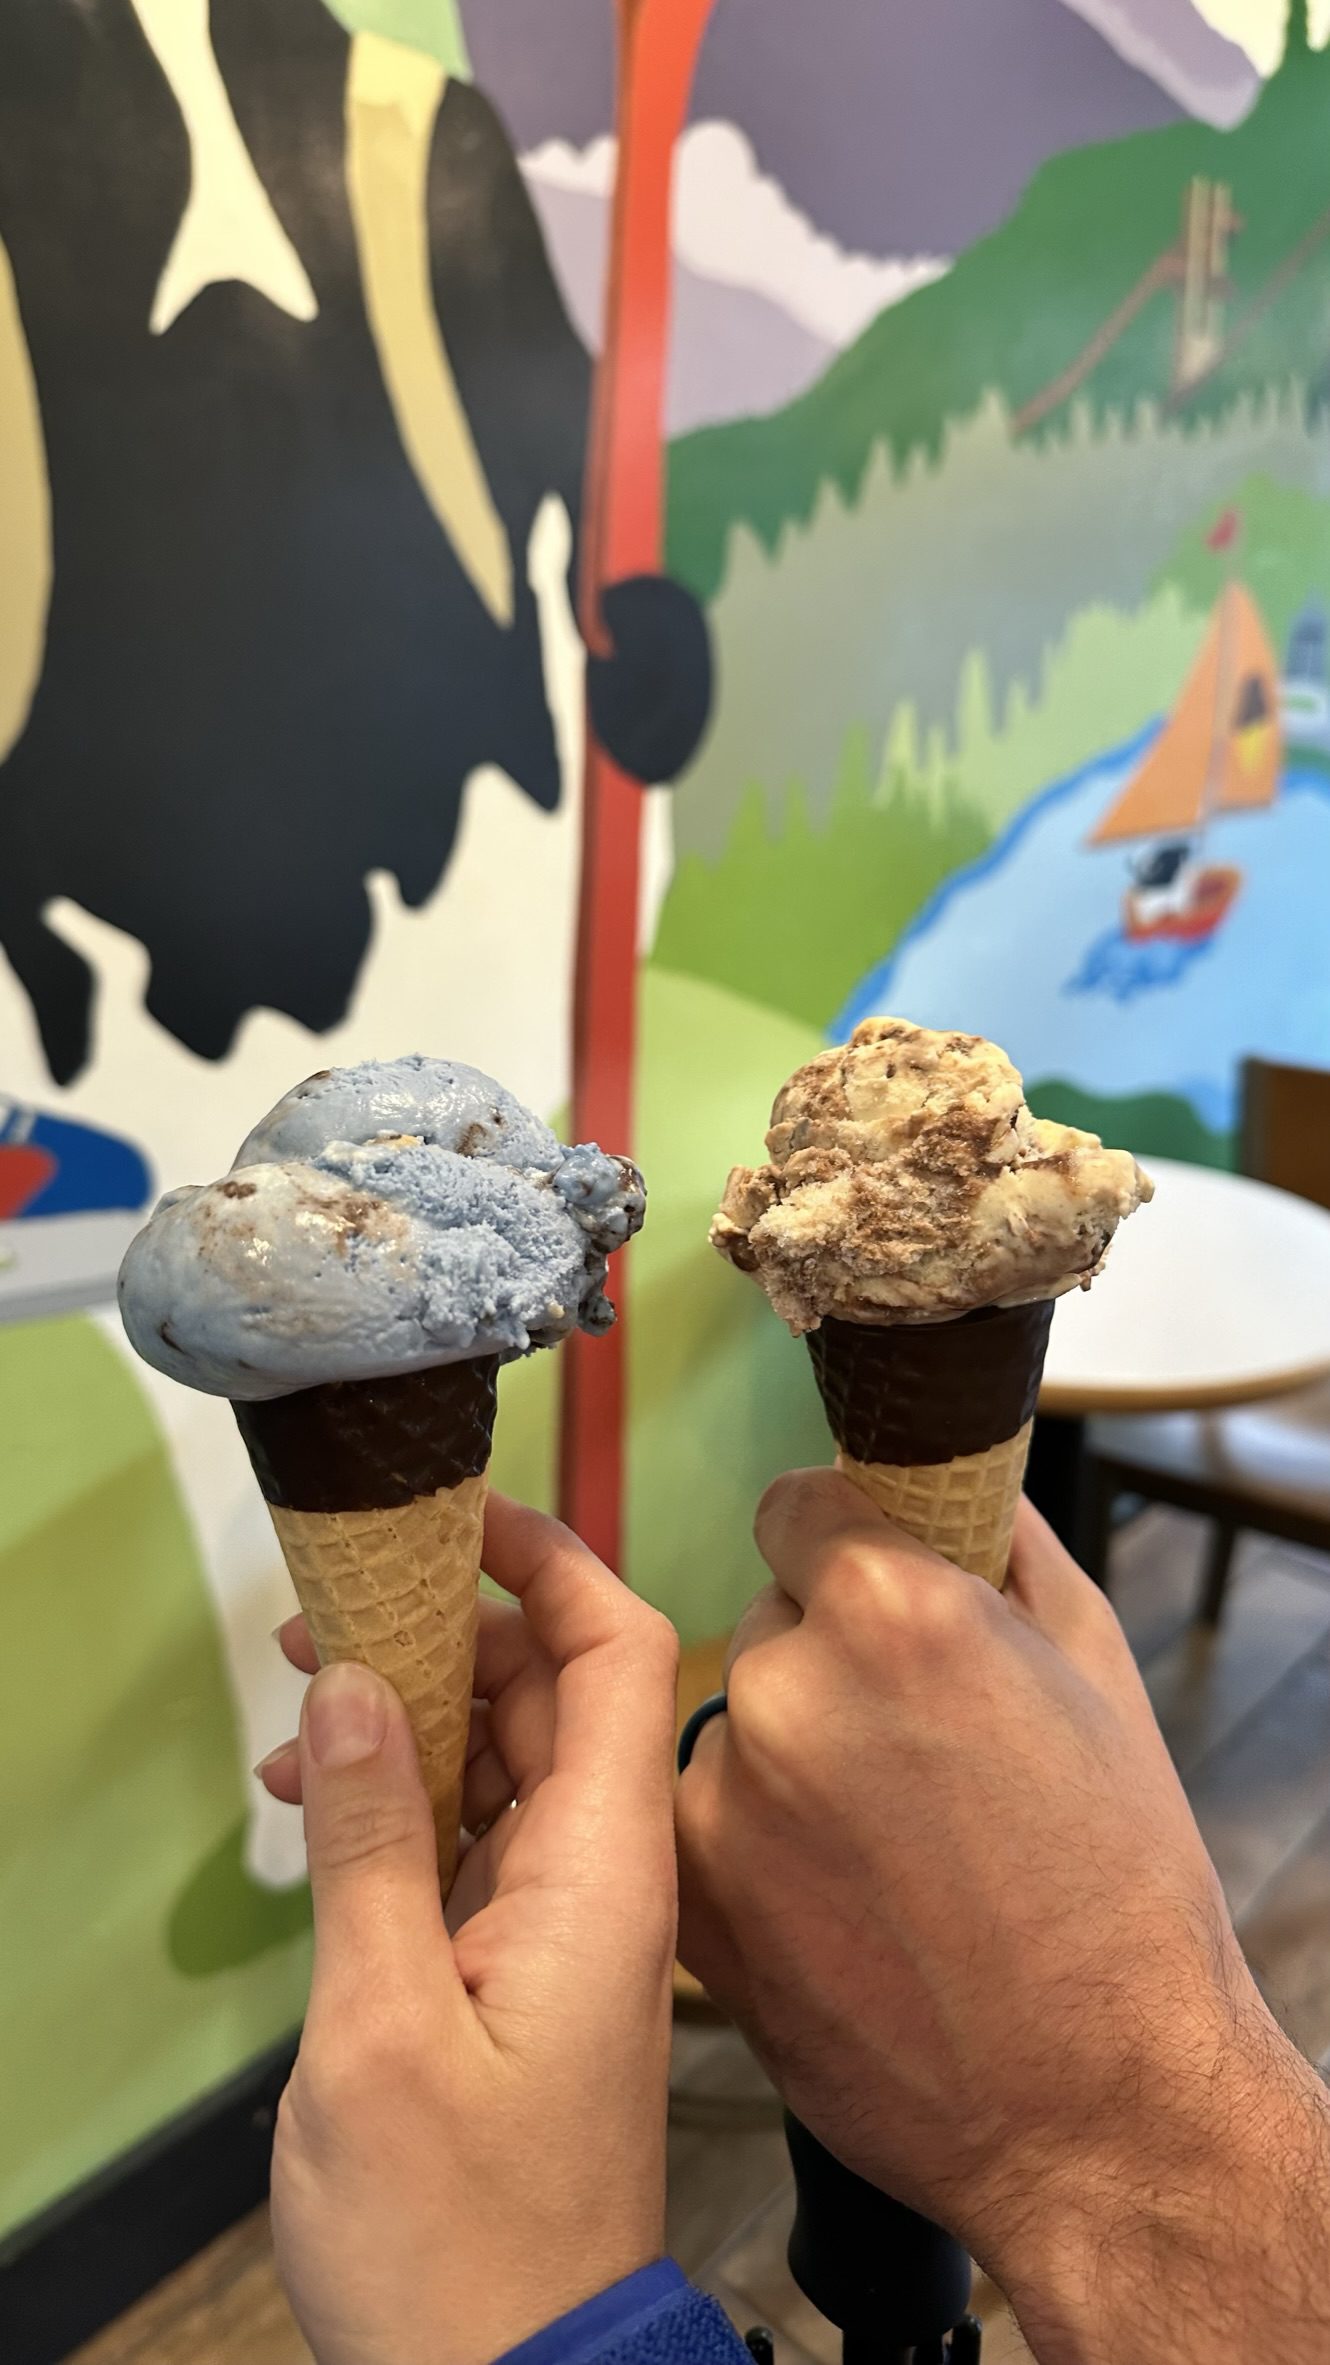 Ben & Jerry's Ice Cream Cones - part of the ice cream trail